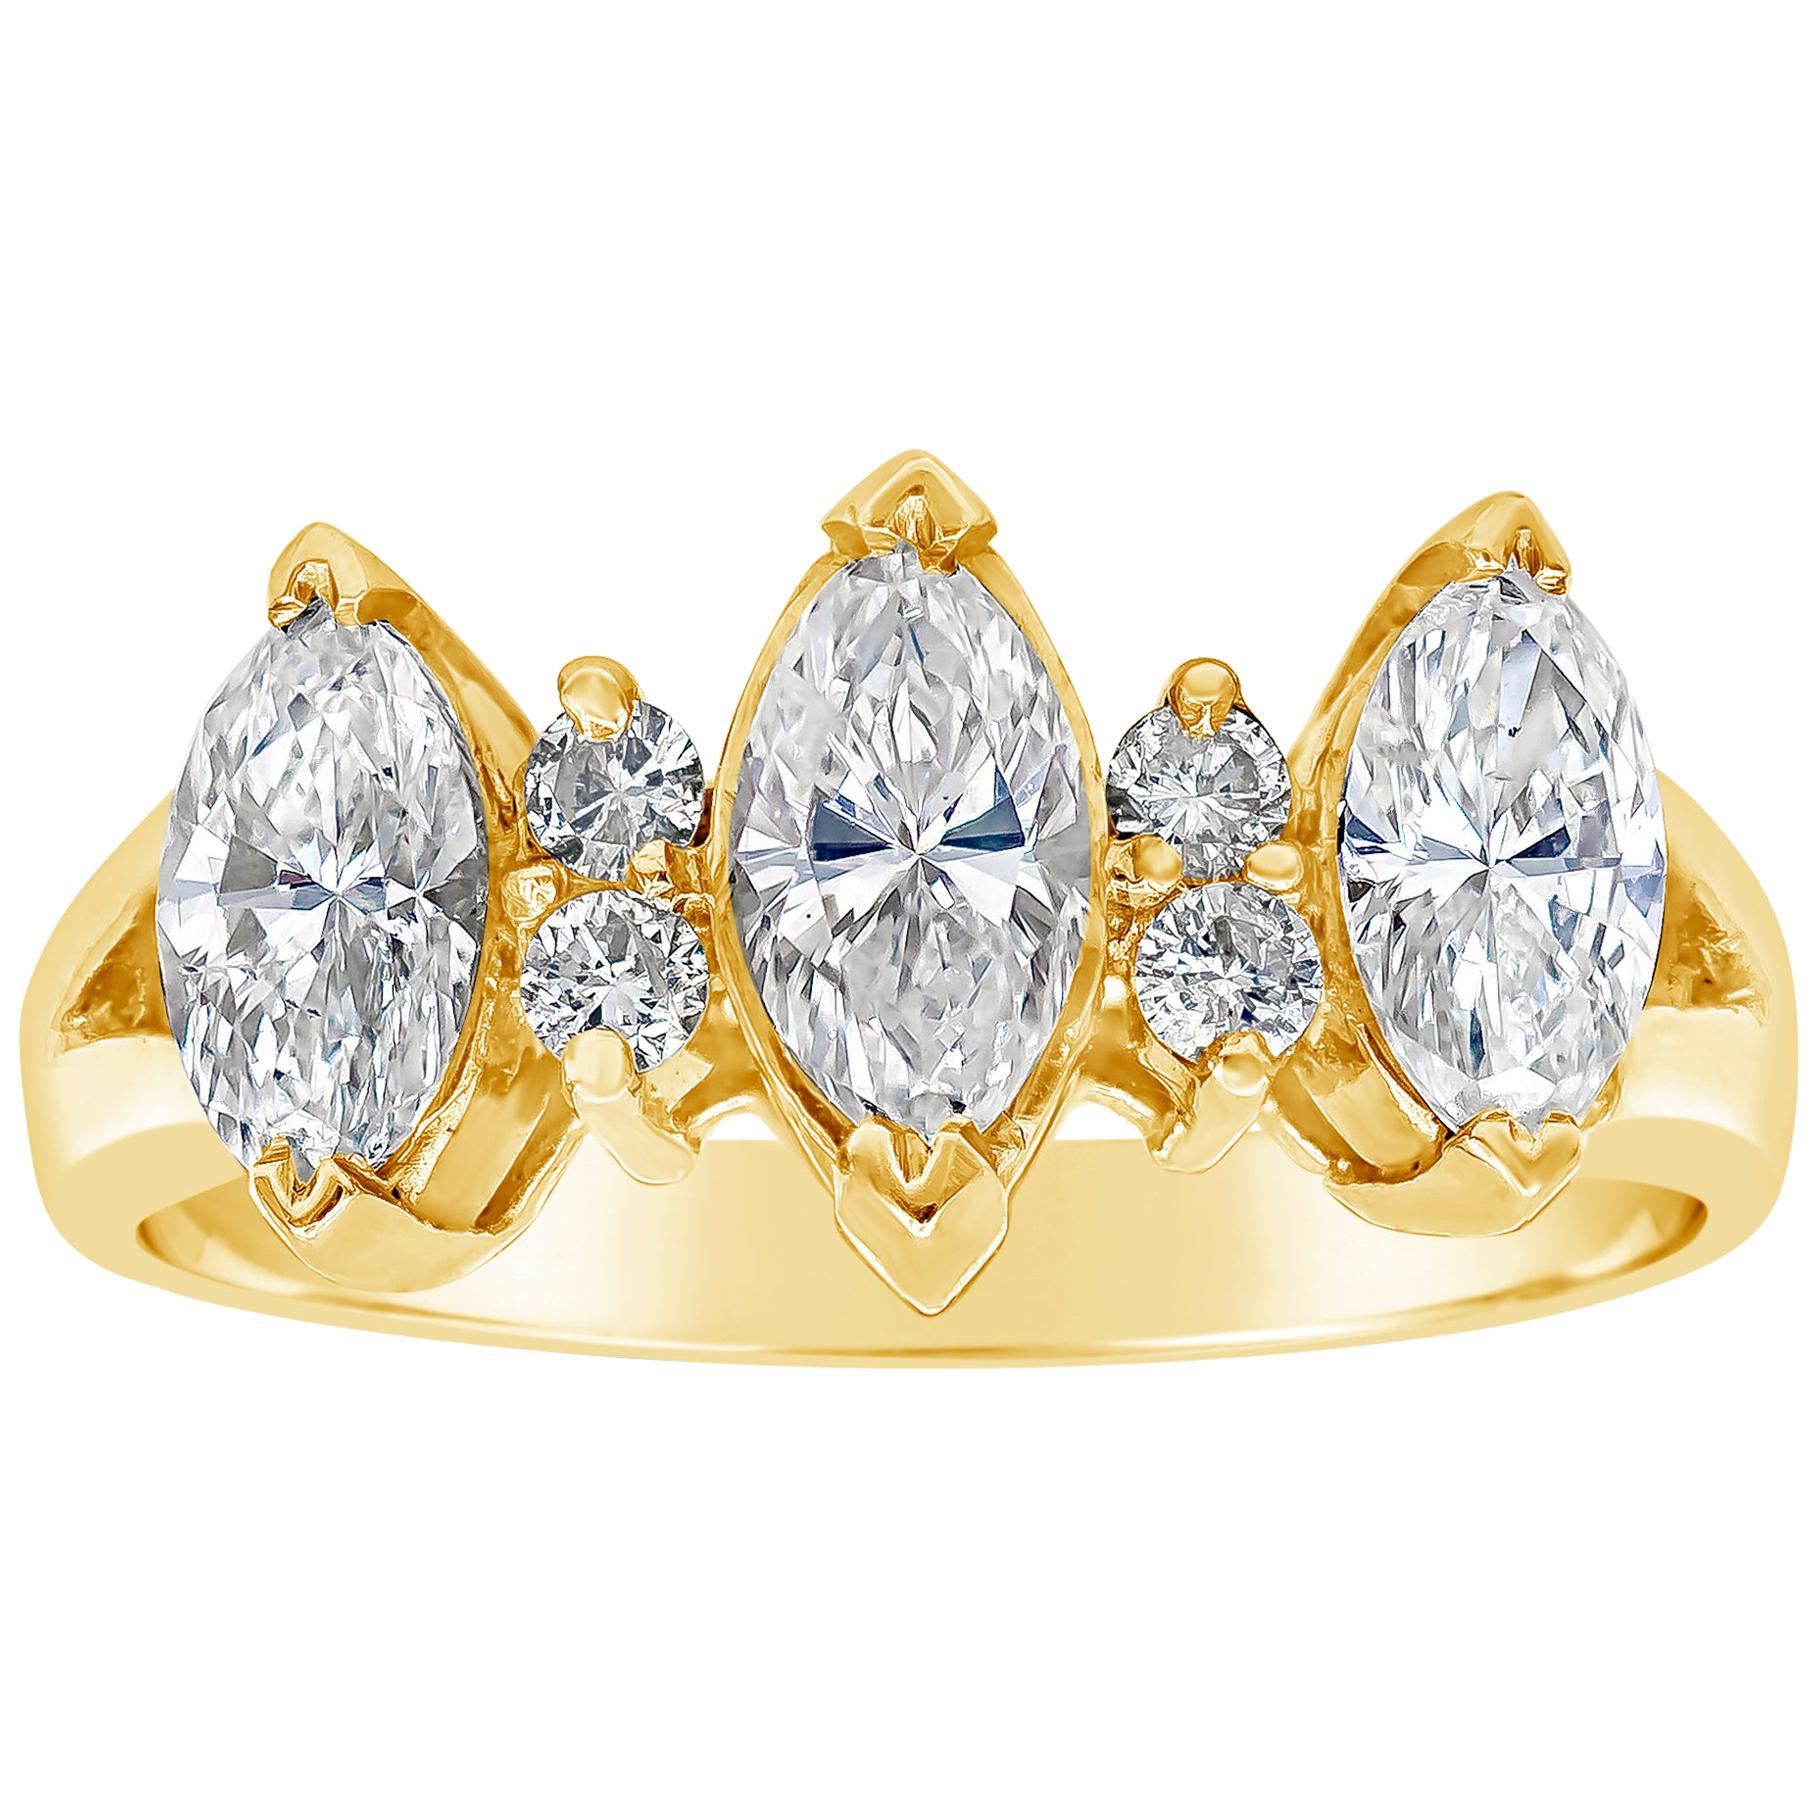 Roman Malakov 1.15 Total Carats Three-Stone Marquise Cut Diamond Engagement Ring